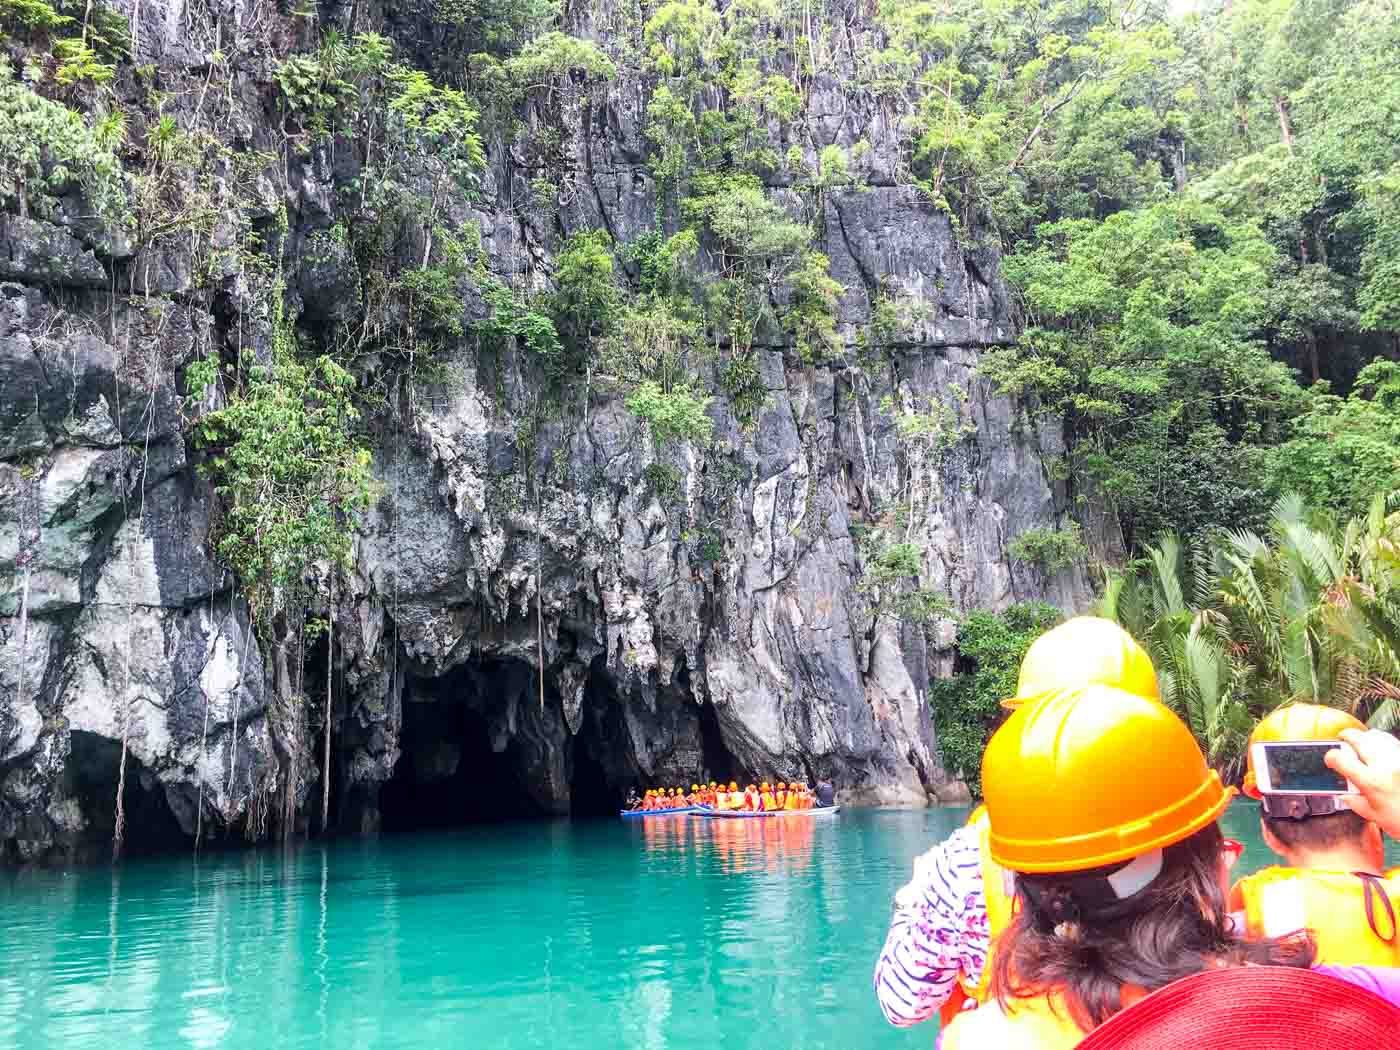 Puerto Princesa Underground River tours suspended due to LPA